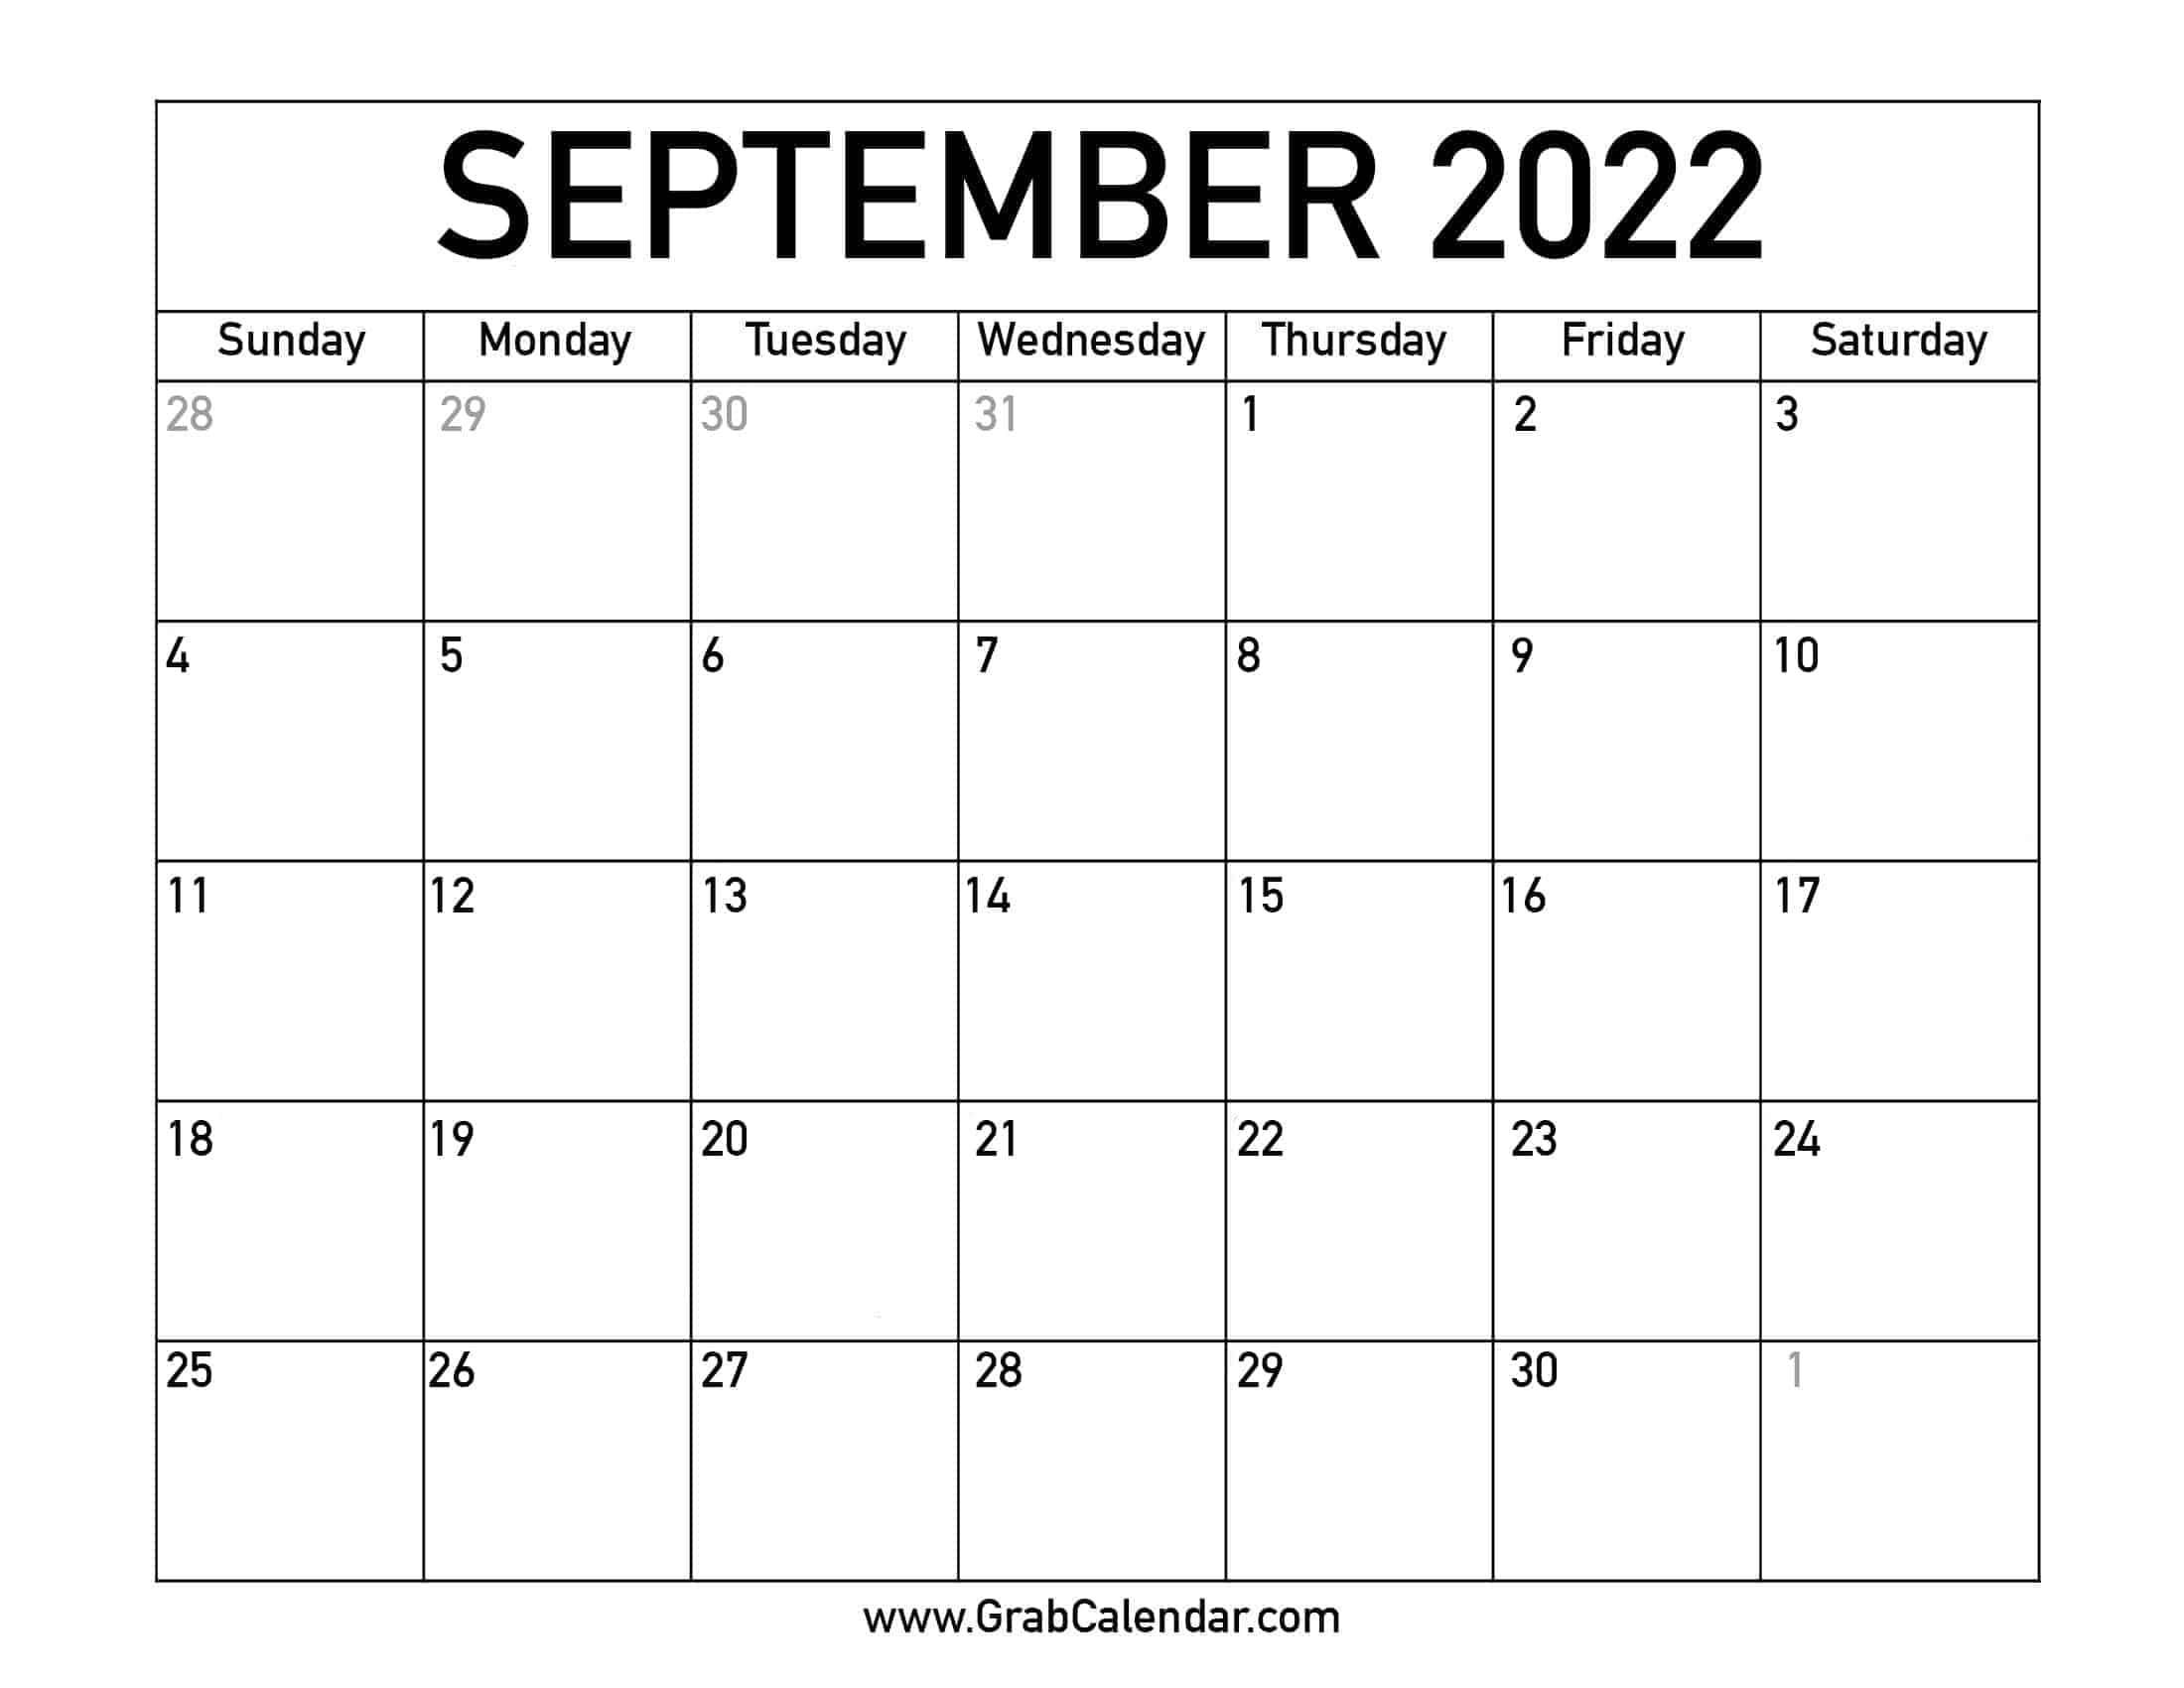 Sept 2022 Calendar Printable September 2022 Calendar